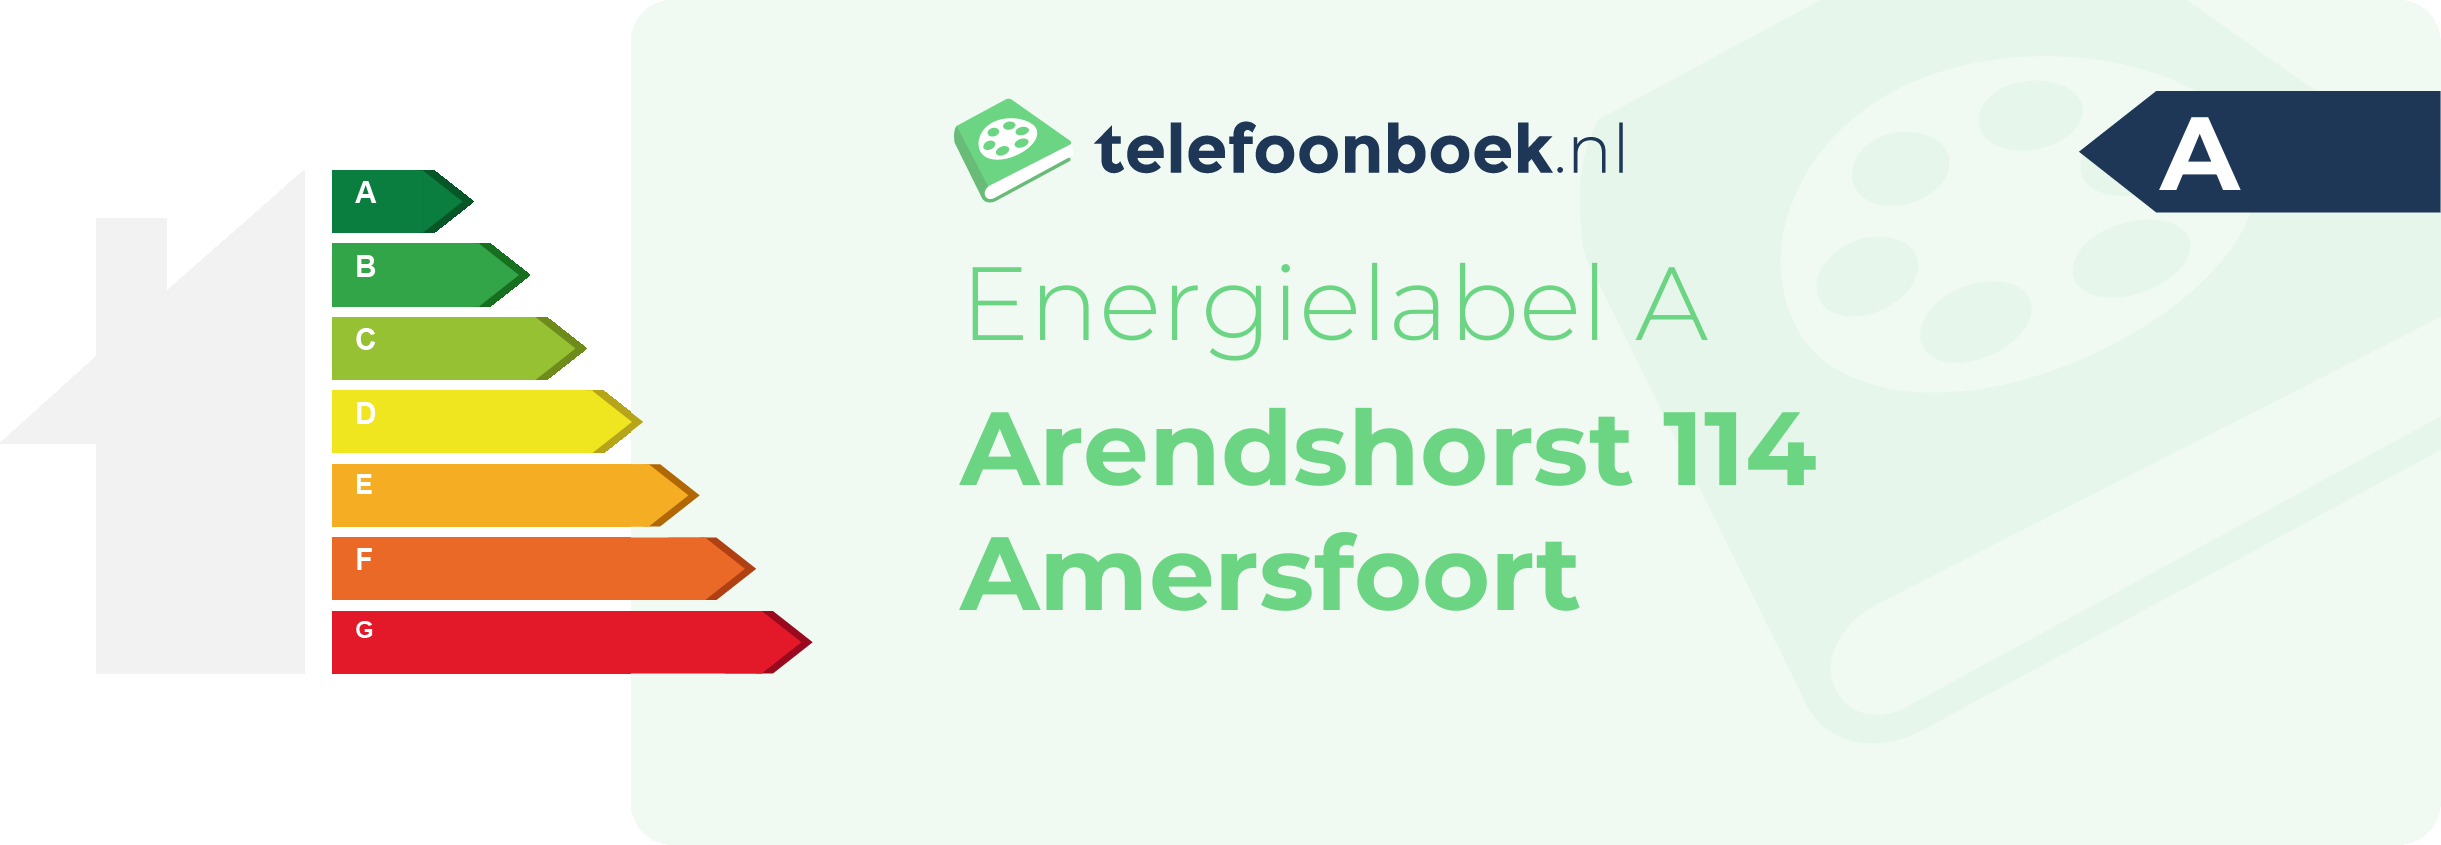 Energielabel Arendshorst 114 Amersfoort